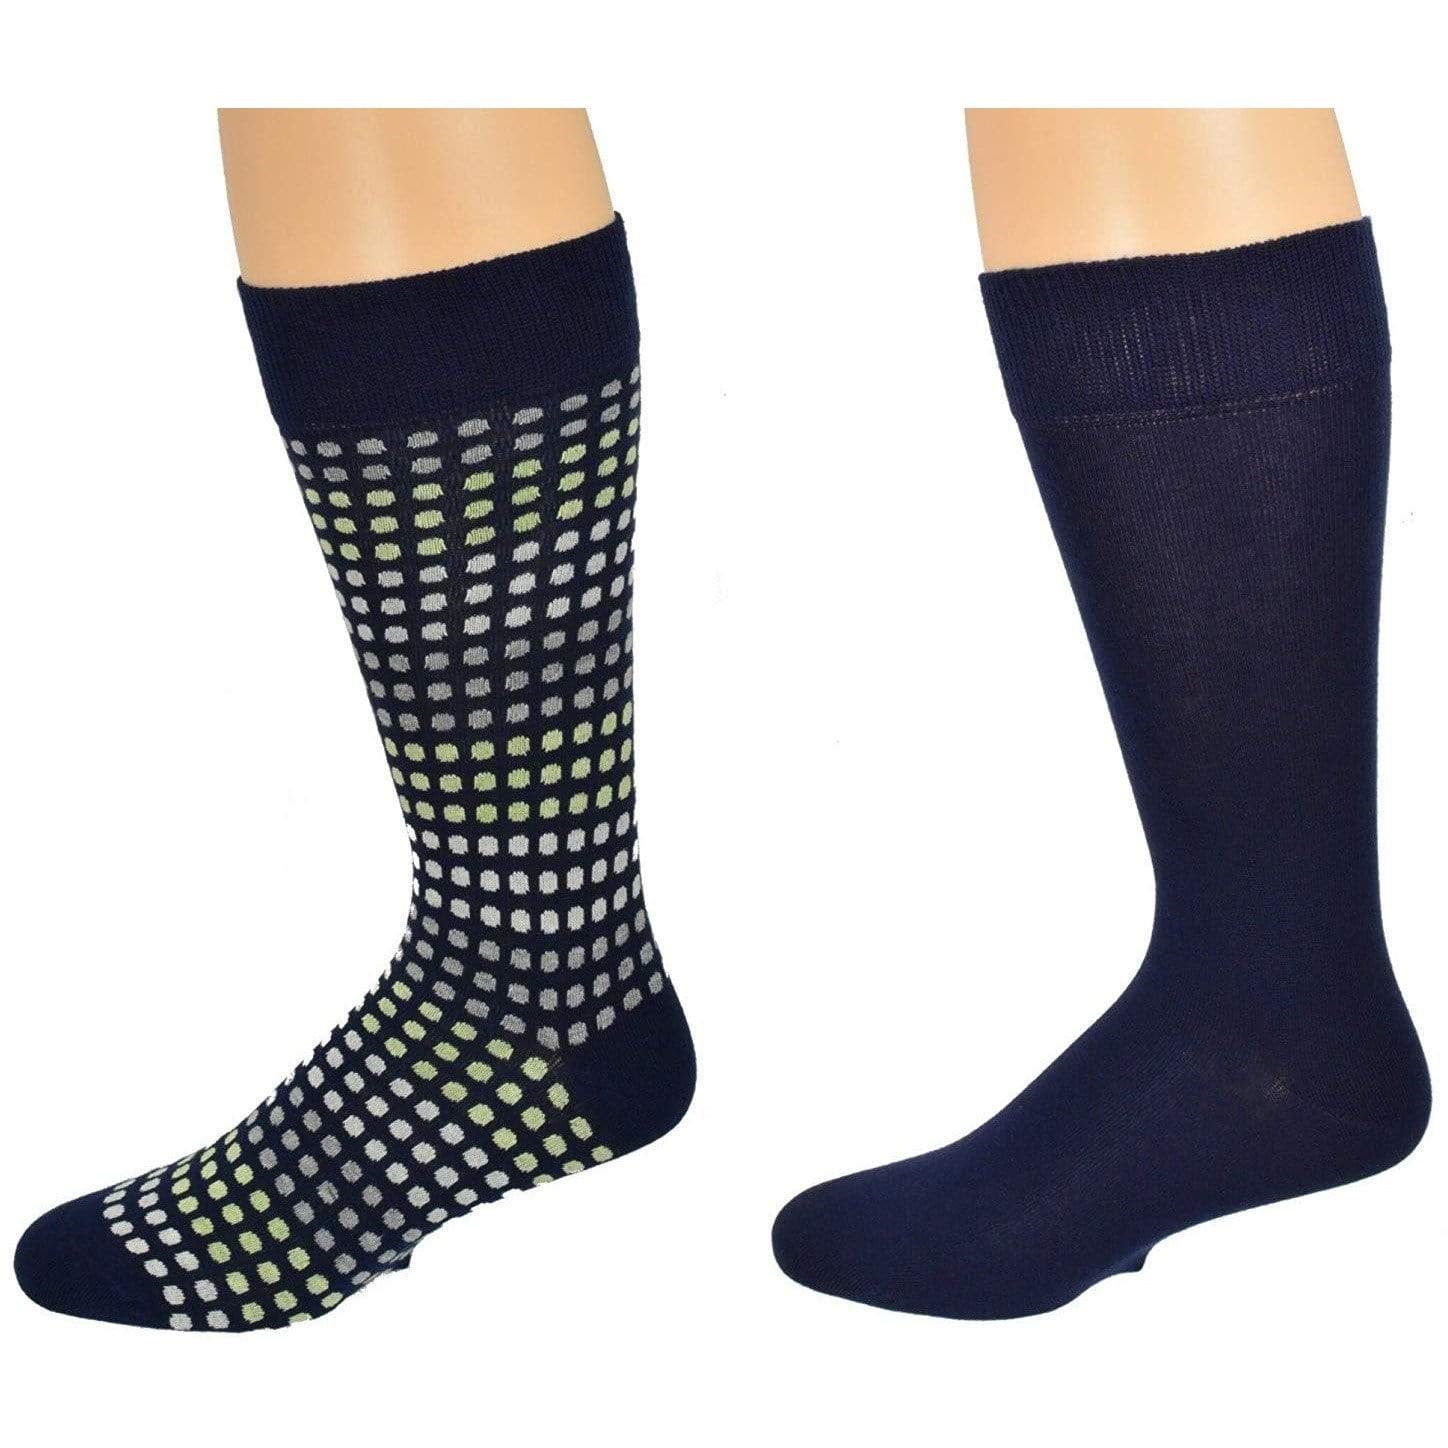 Sierra Socks Men's Casual Cotton Blend Fashion Design Mid Calf Dress Crew Socks, 3 Pairs (One Size: Fits US Men’s Shoe Size 6-12/ Sock Size, Navy Square/Navy Plain (M5500U)) - image 1 of 5